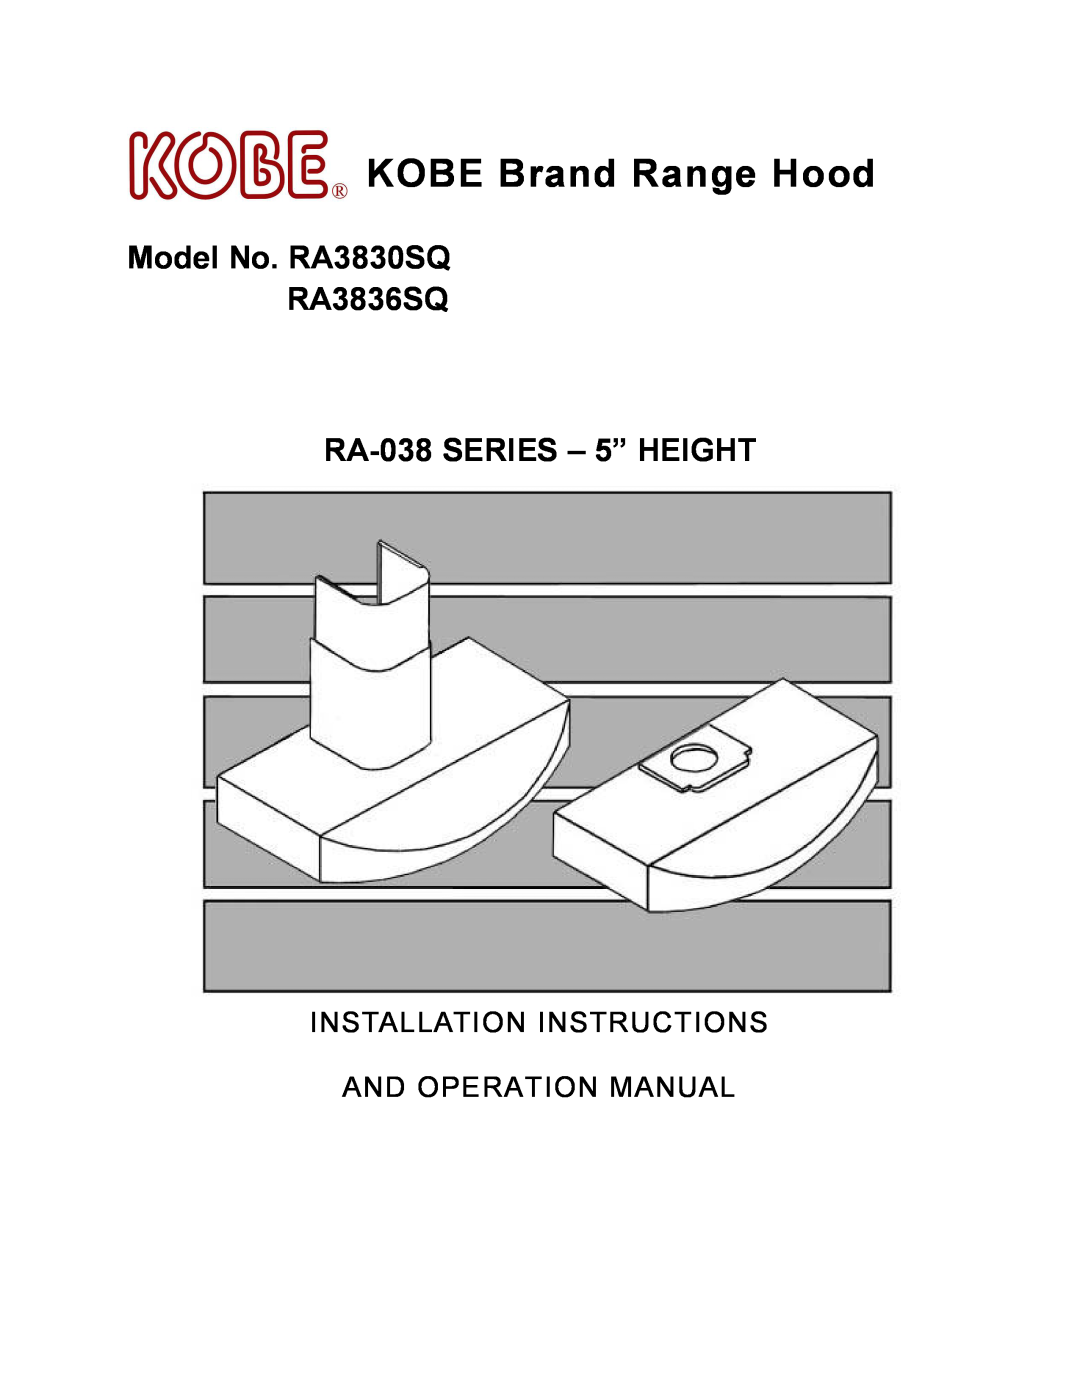 Kobe Range Hoods installation instructions KOBE Brand Range Hood, Model No. RA3830SQ RA3836SQ, RA-038SERIES - 5” HEIGHT 